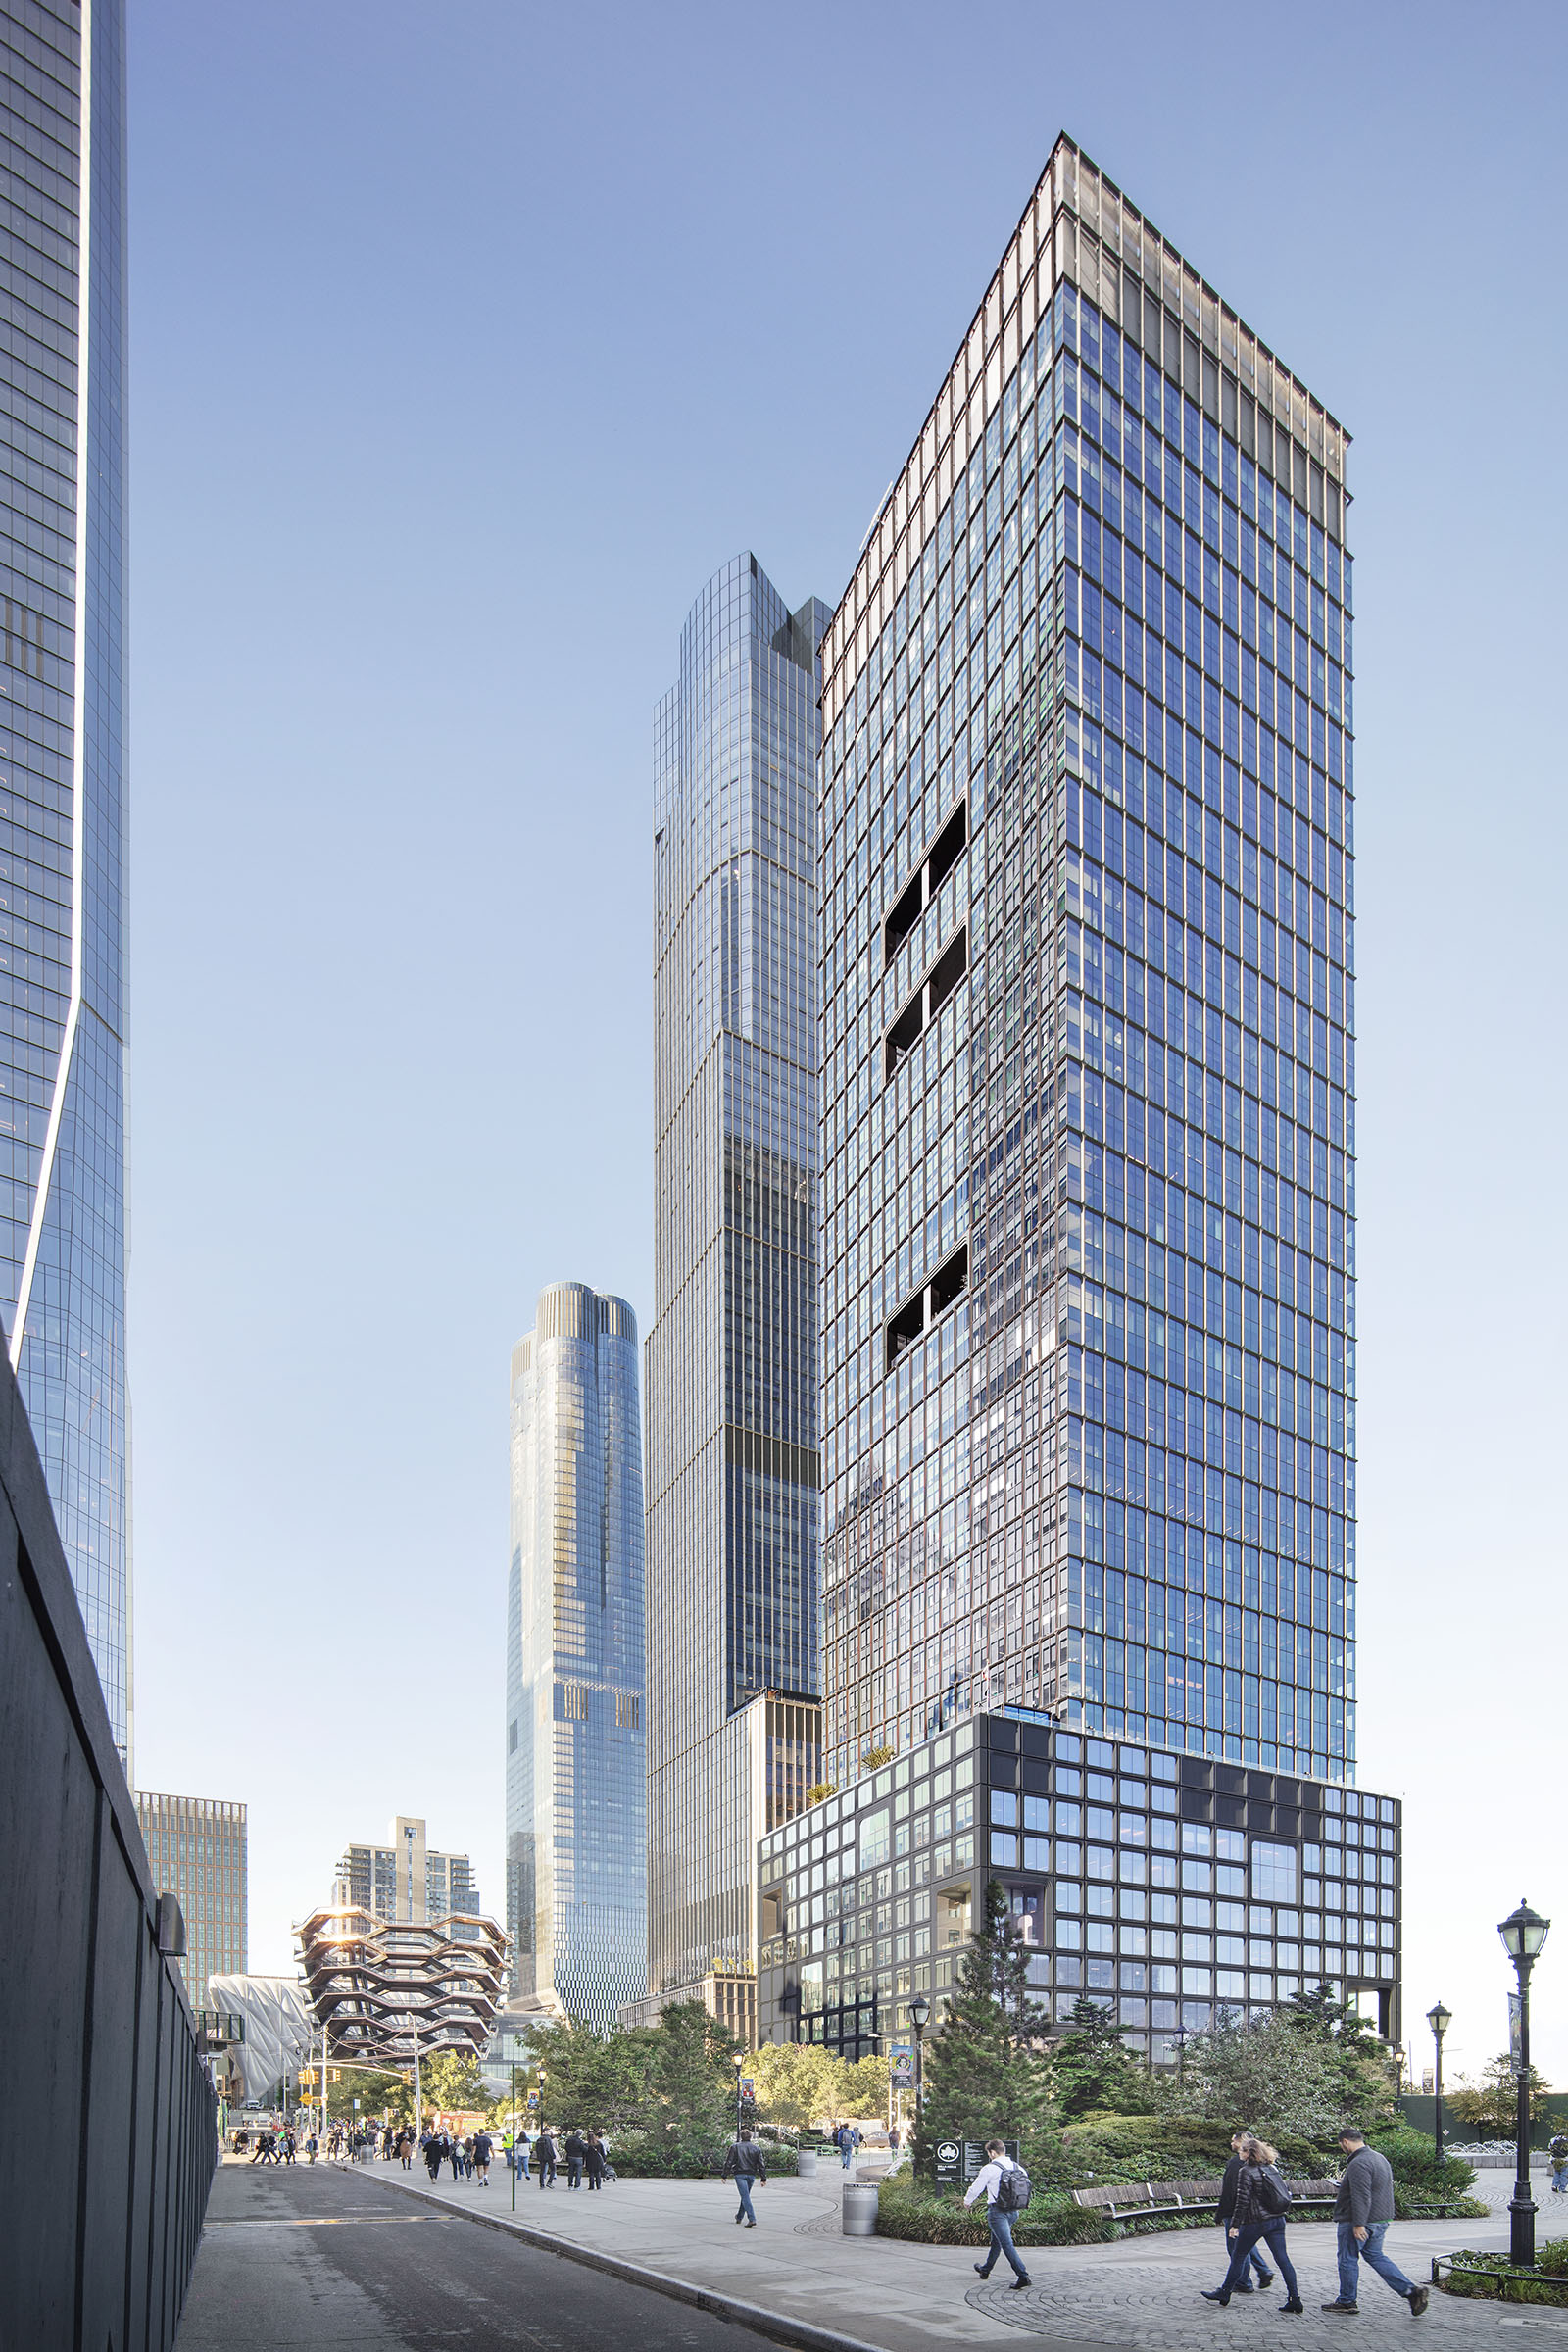 Architecture Merit Award: 55 Hudson Yards by Kohn Pedersen Fox Associates, in New York, NY. Photo: Scott Frances.